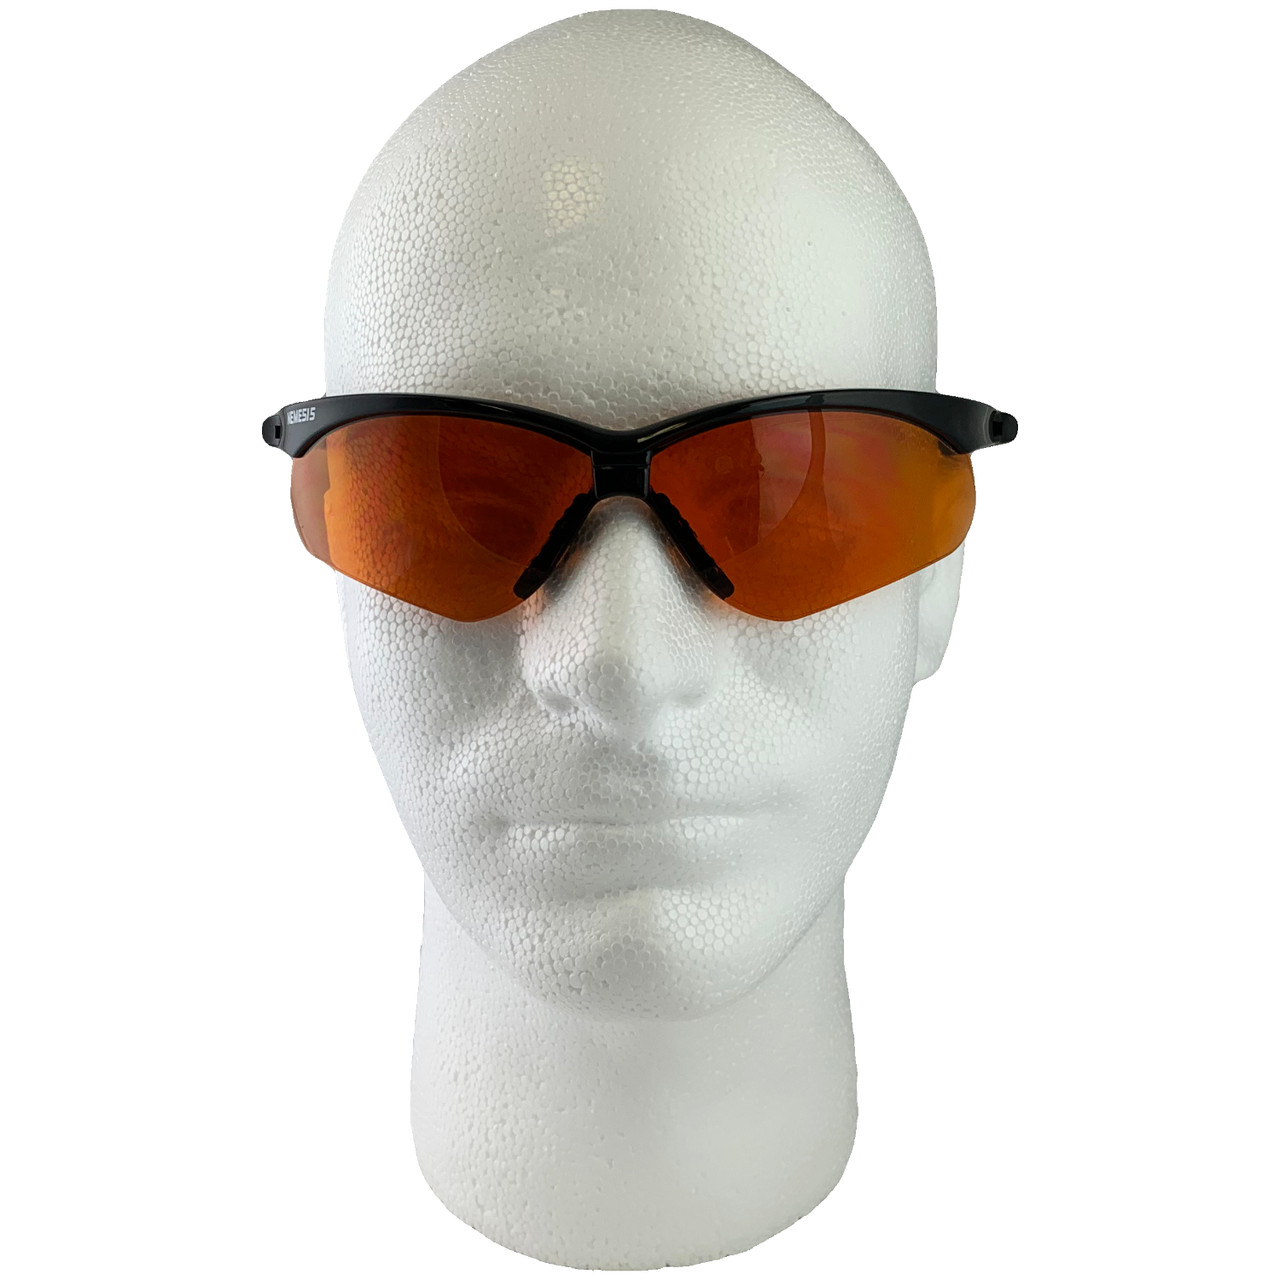 Jackson Nemesis Safety Glasses w/ Copper Lens